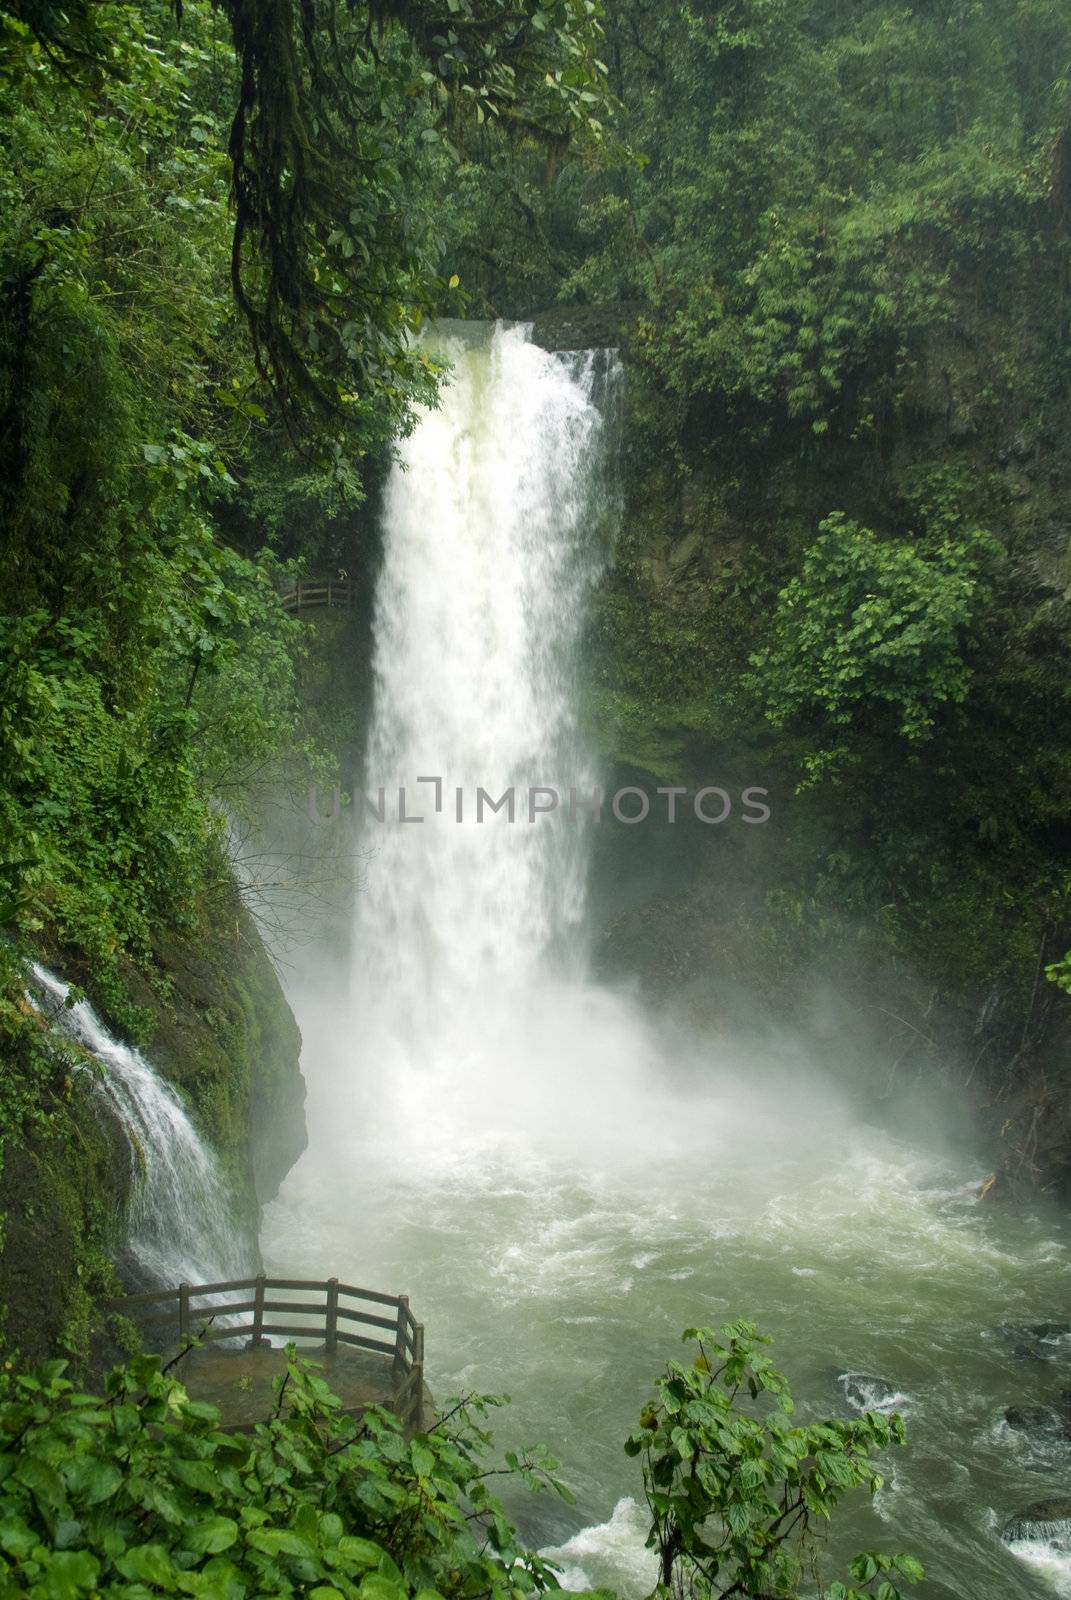 Giant waterfall in La Paz park, Costa Rica